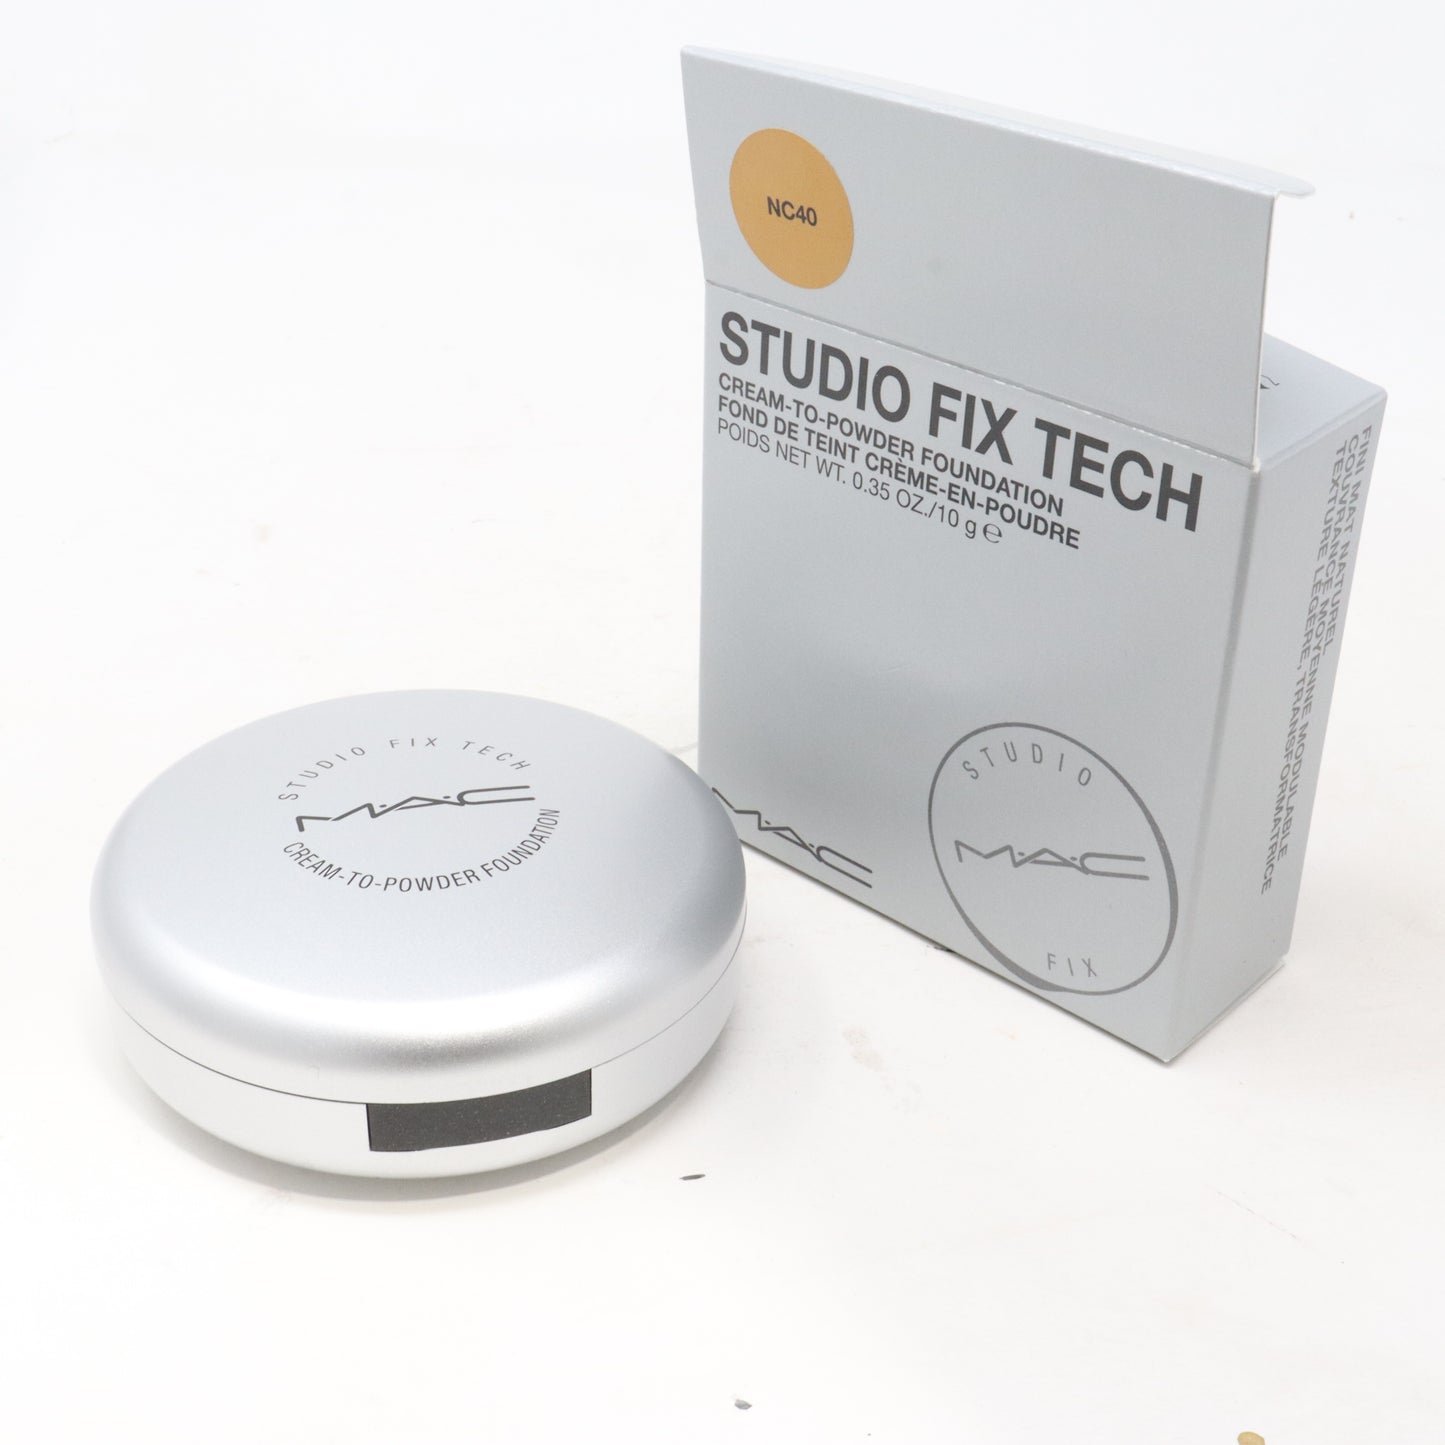 Studio Fix Tech Foundation 10 g